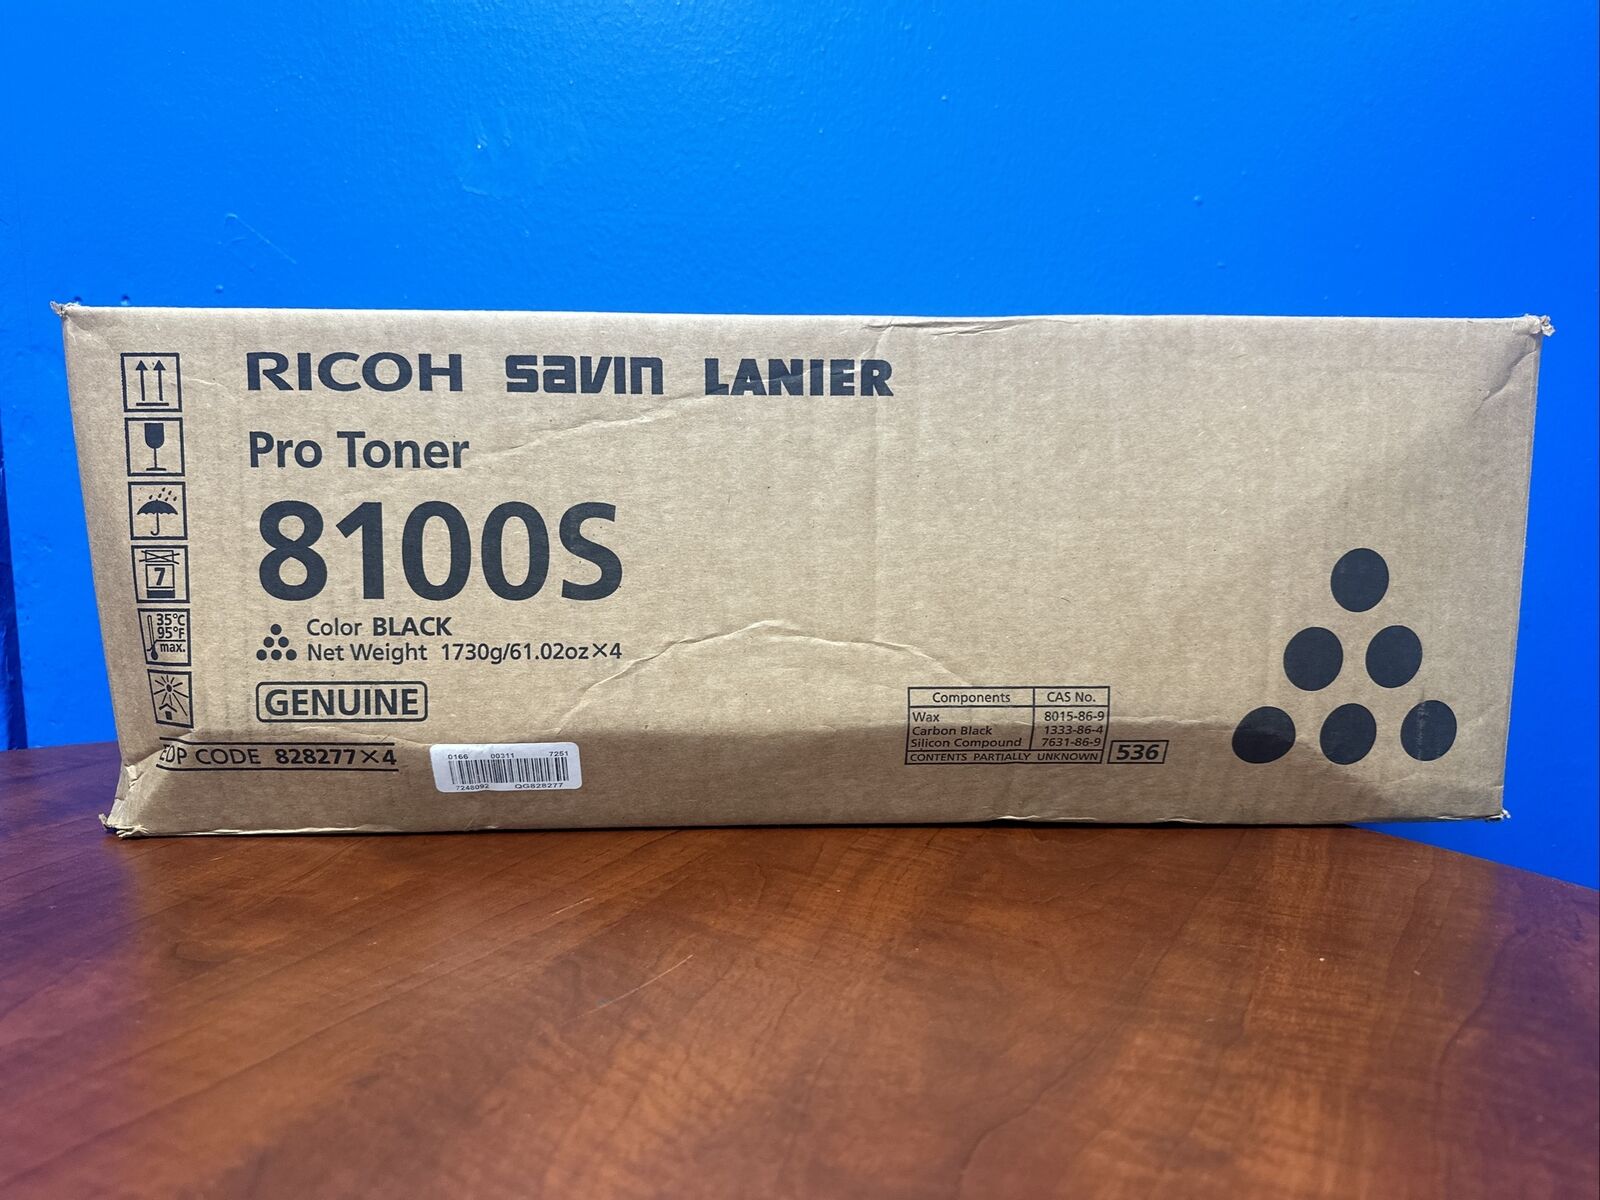 Ricoh Savin Lanier Pro Toner 8100s (828277) 4 Count Box